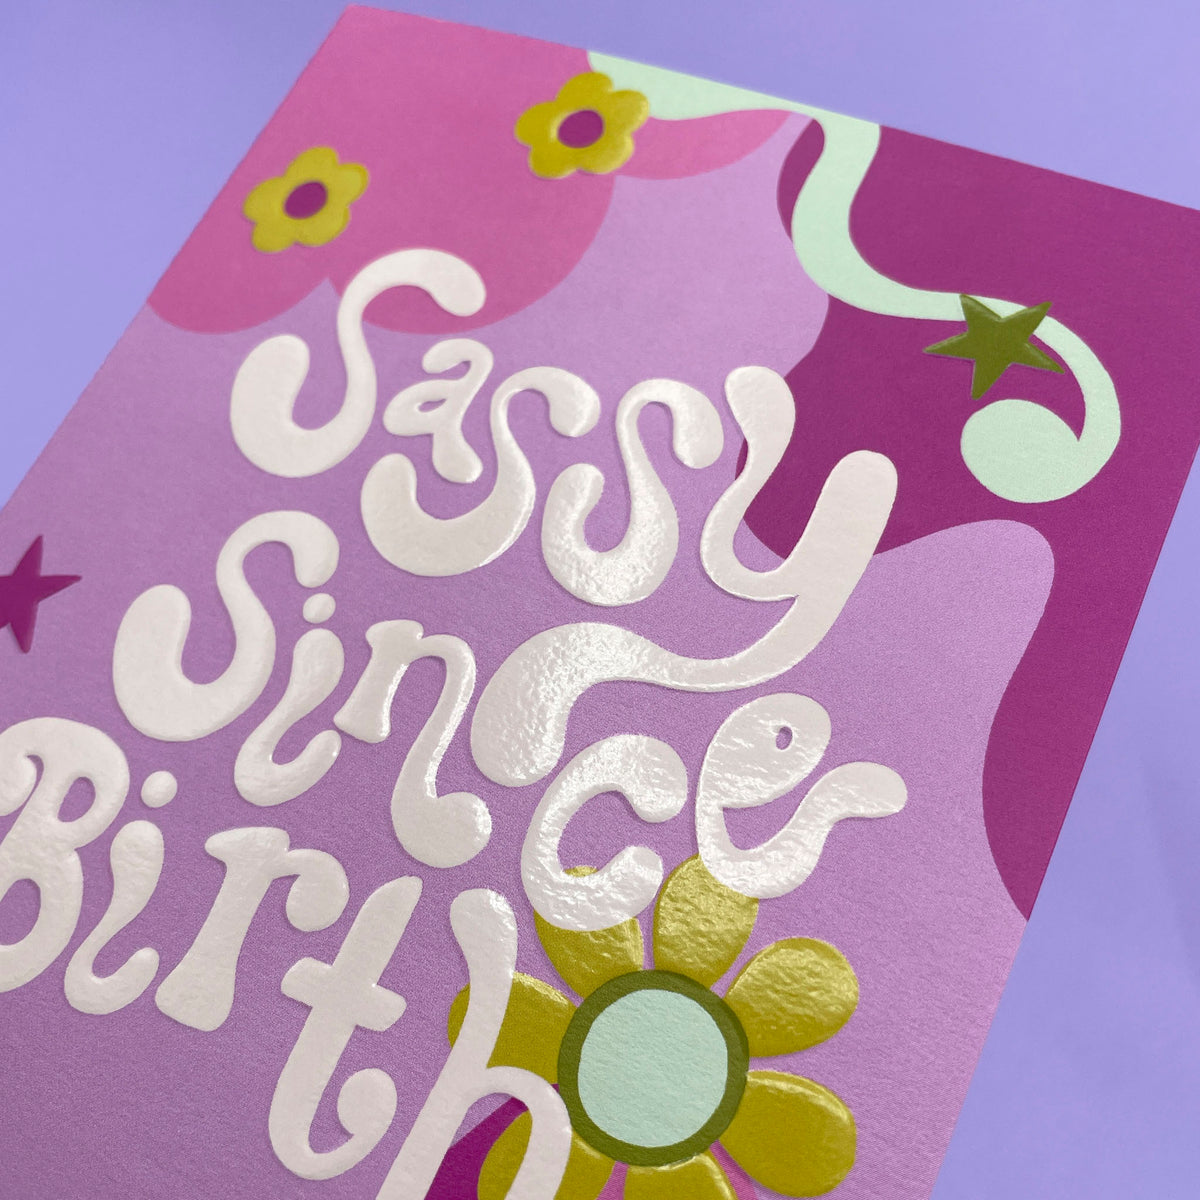 Sassy Since Birth Funny Card